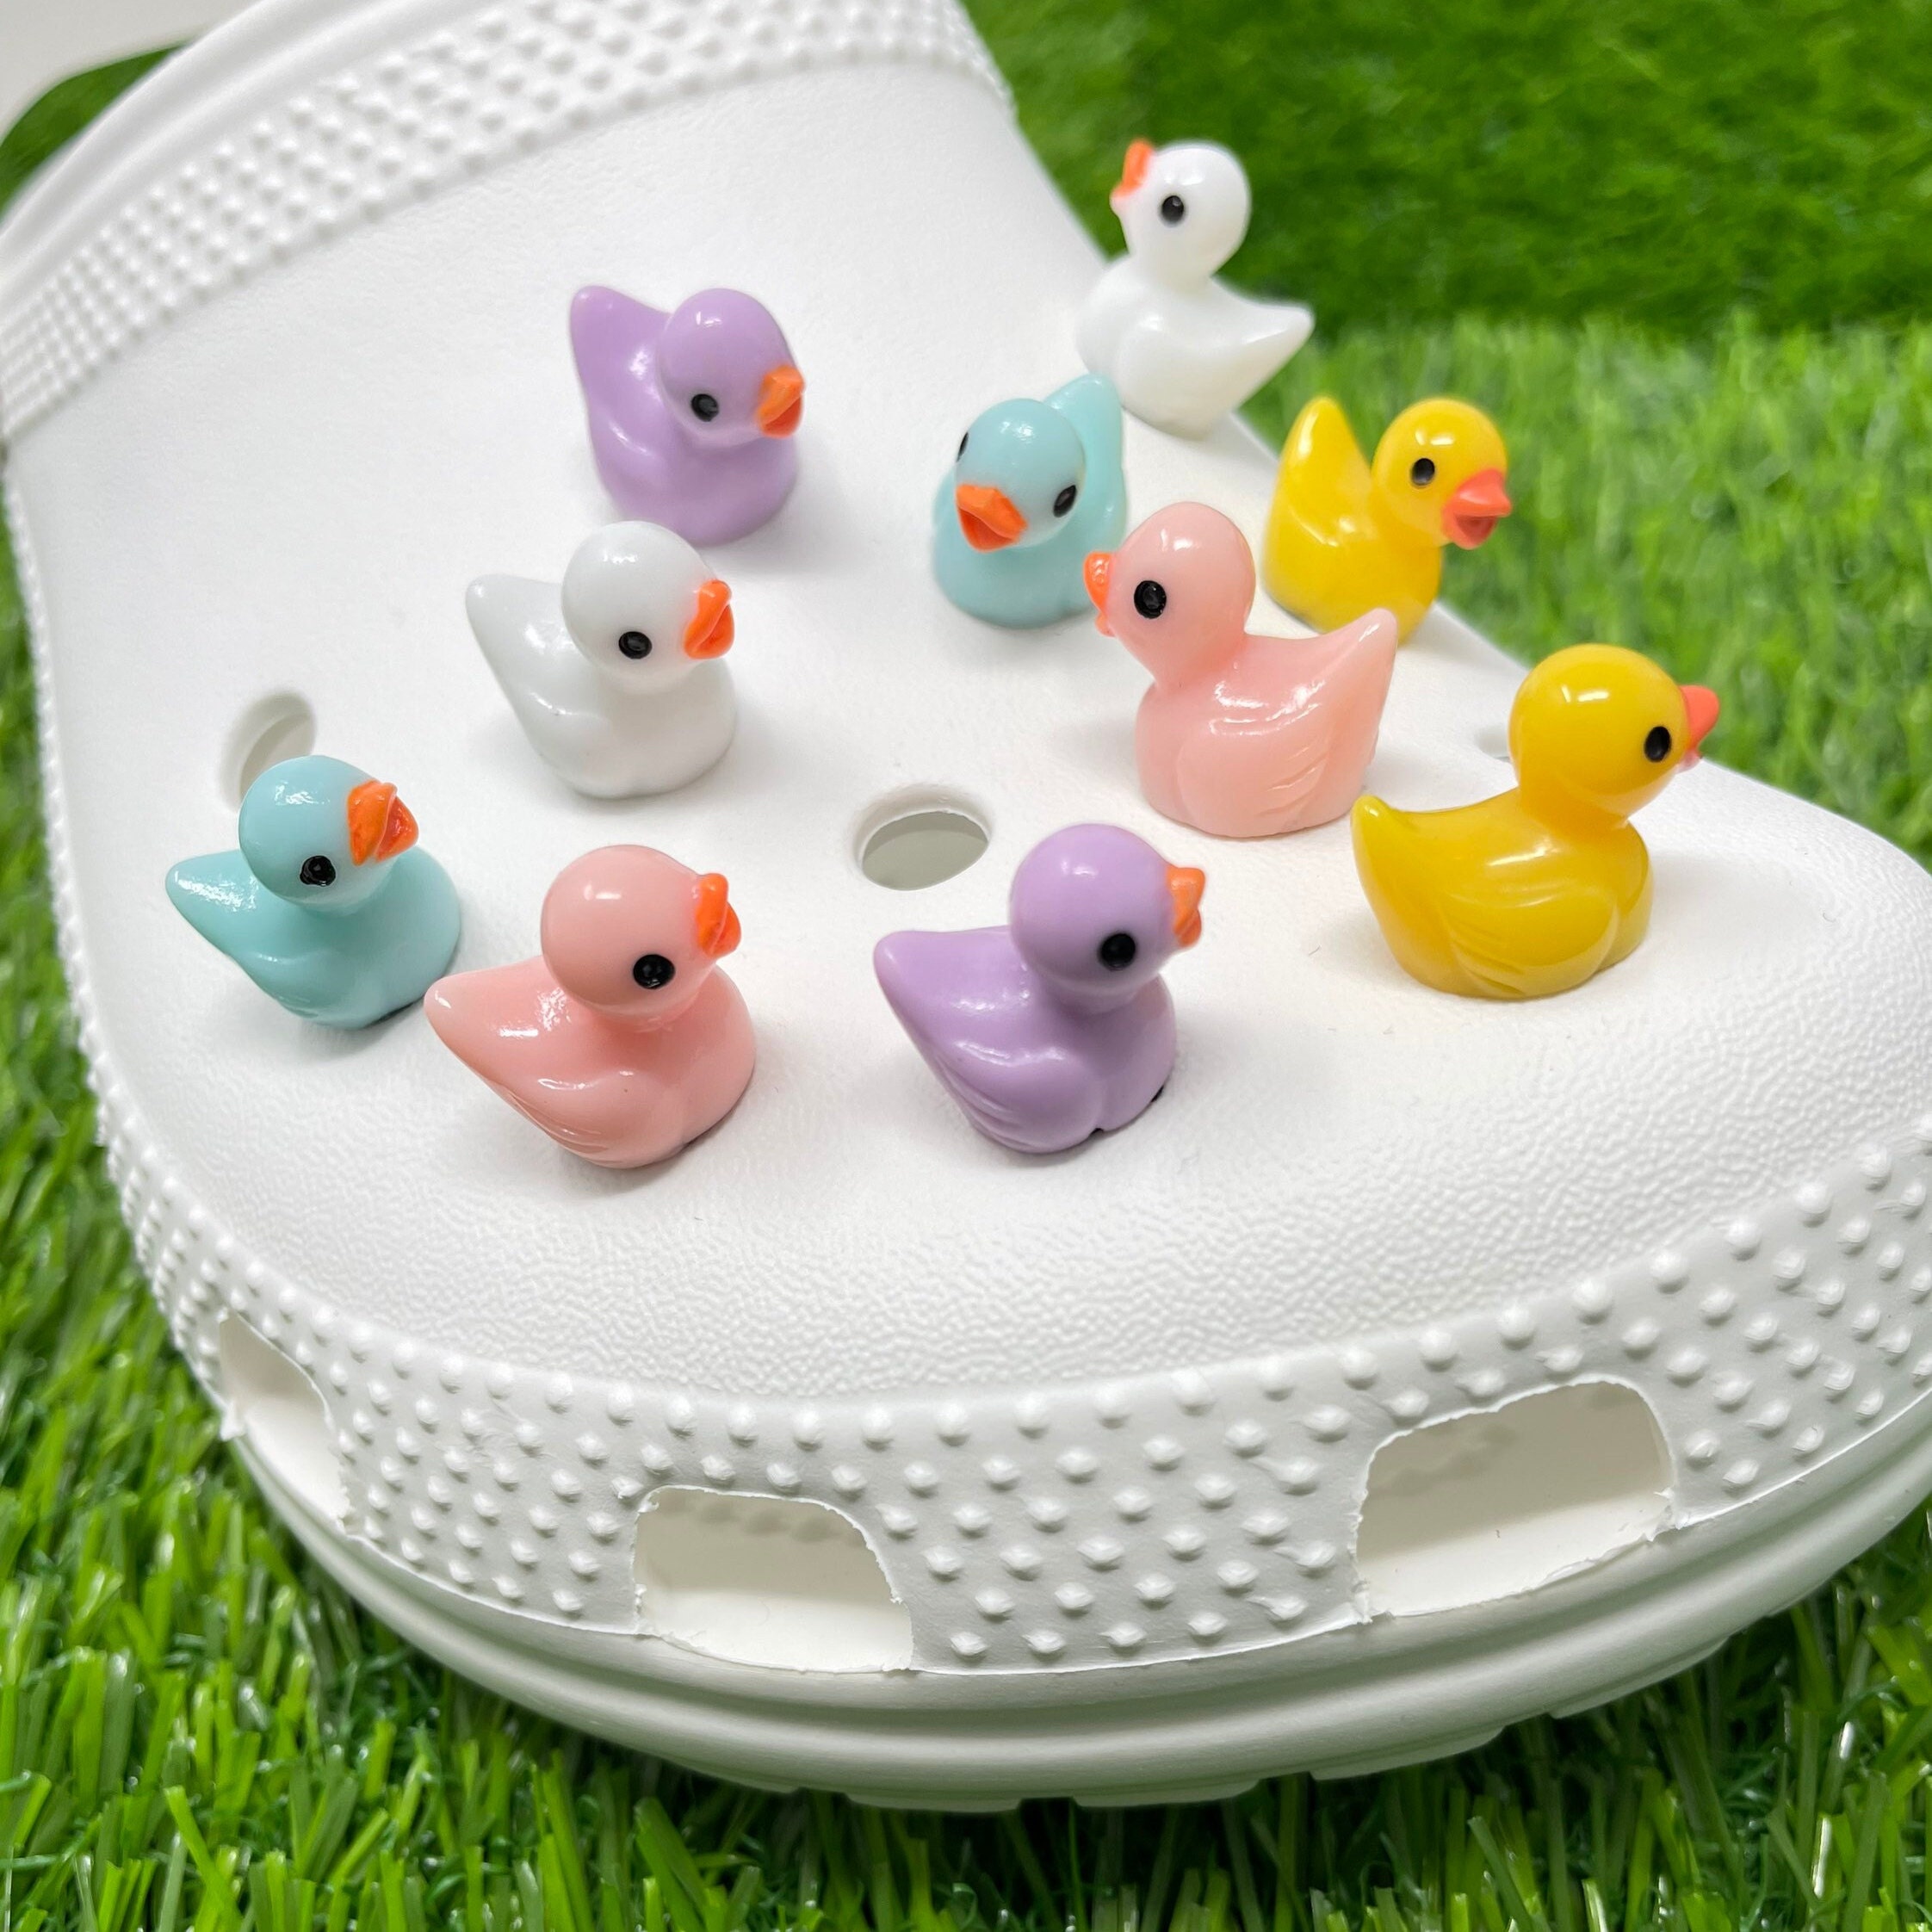 Duck Croc Charms,3D Duck Shoe Charms Set, Duck Charm, Cartoon Duck Crocs Shoes Charms, Kawaii Croc Charms, DIY, Cartoon Animal Charms